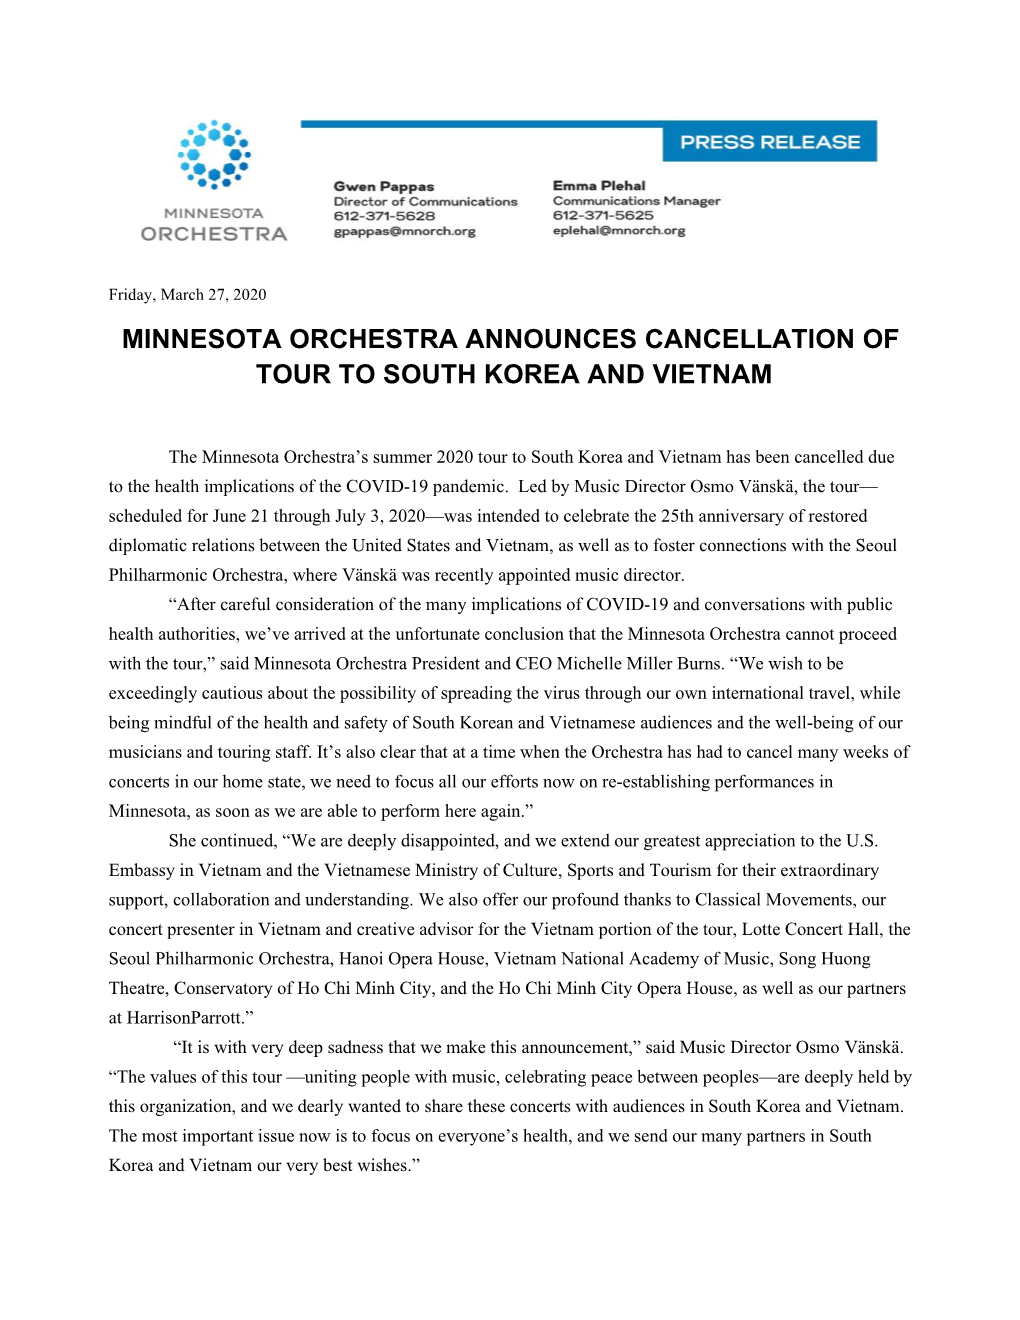 Minnesota Orchestra Announces Cancellation of Tour to South Korea and Vietnam